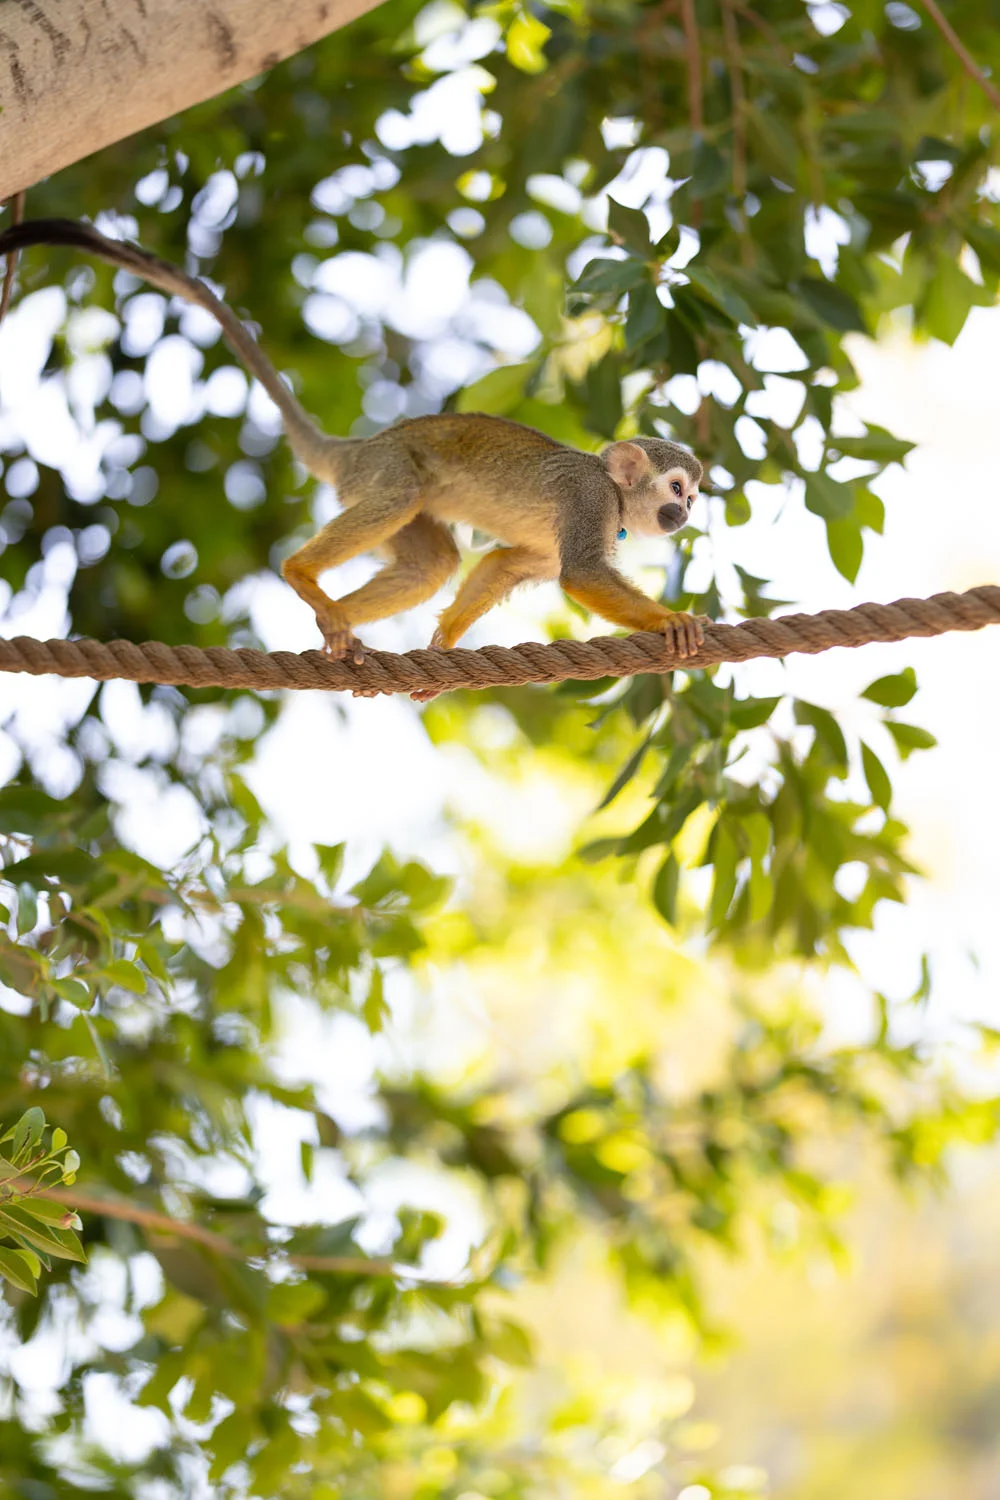 Small monkey climbing a rope